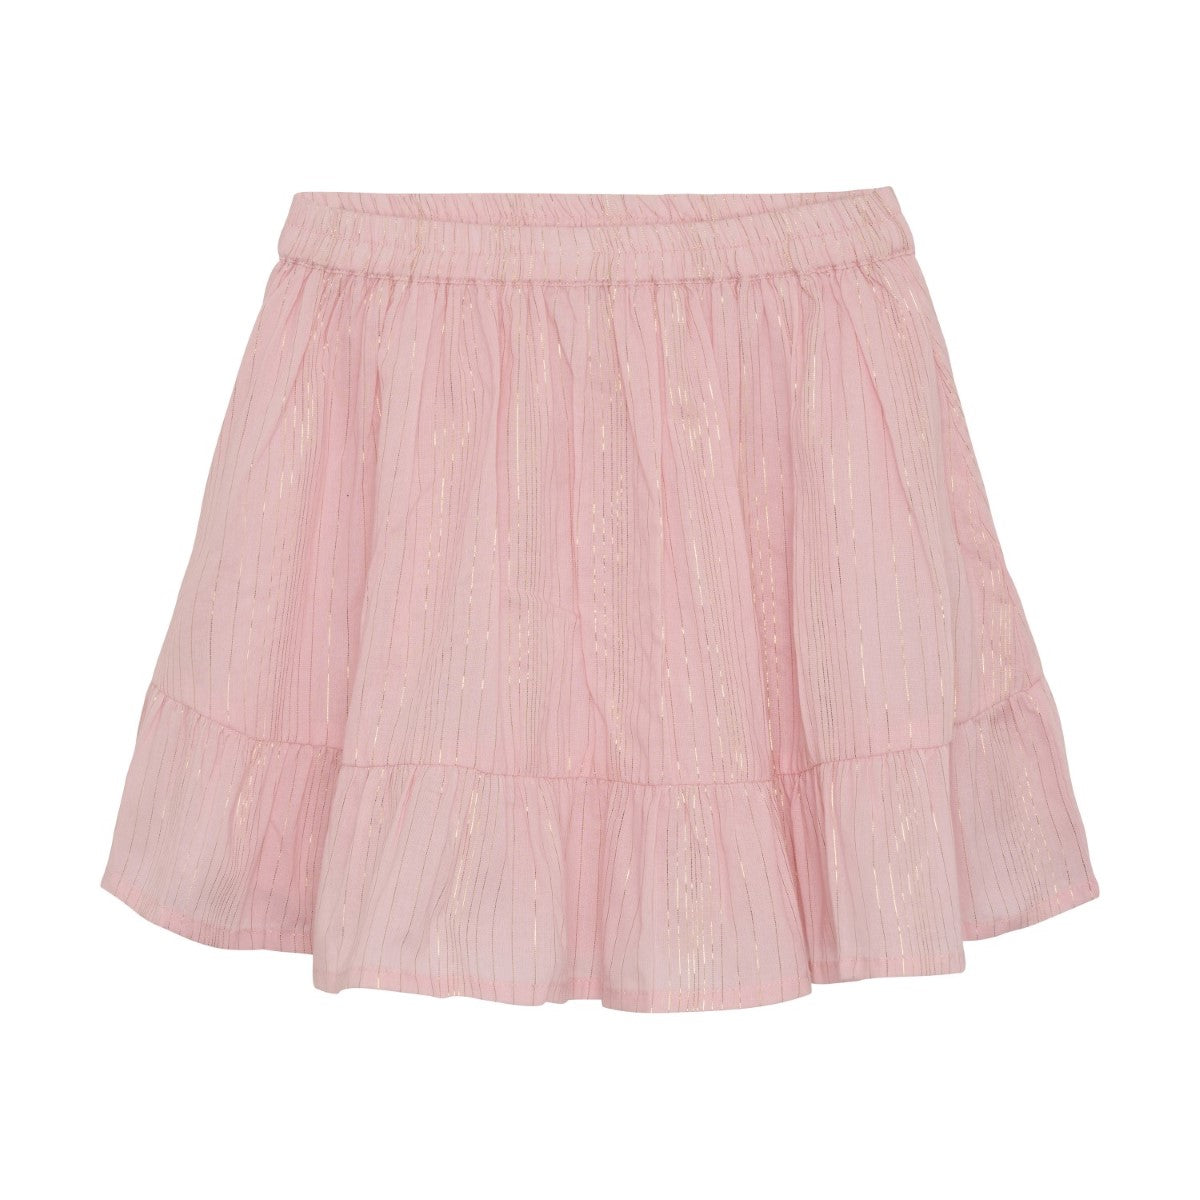 Blush Rose Skirt